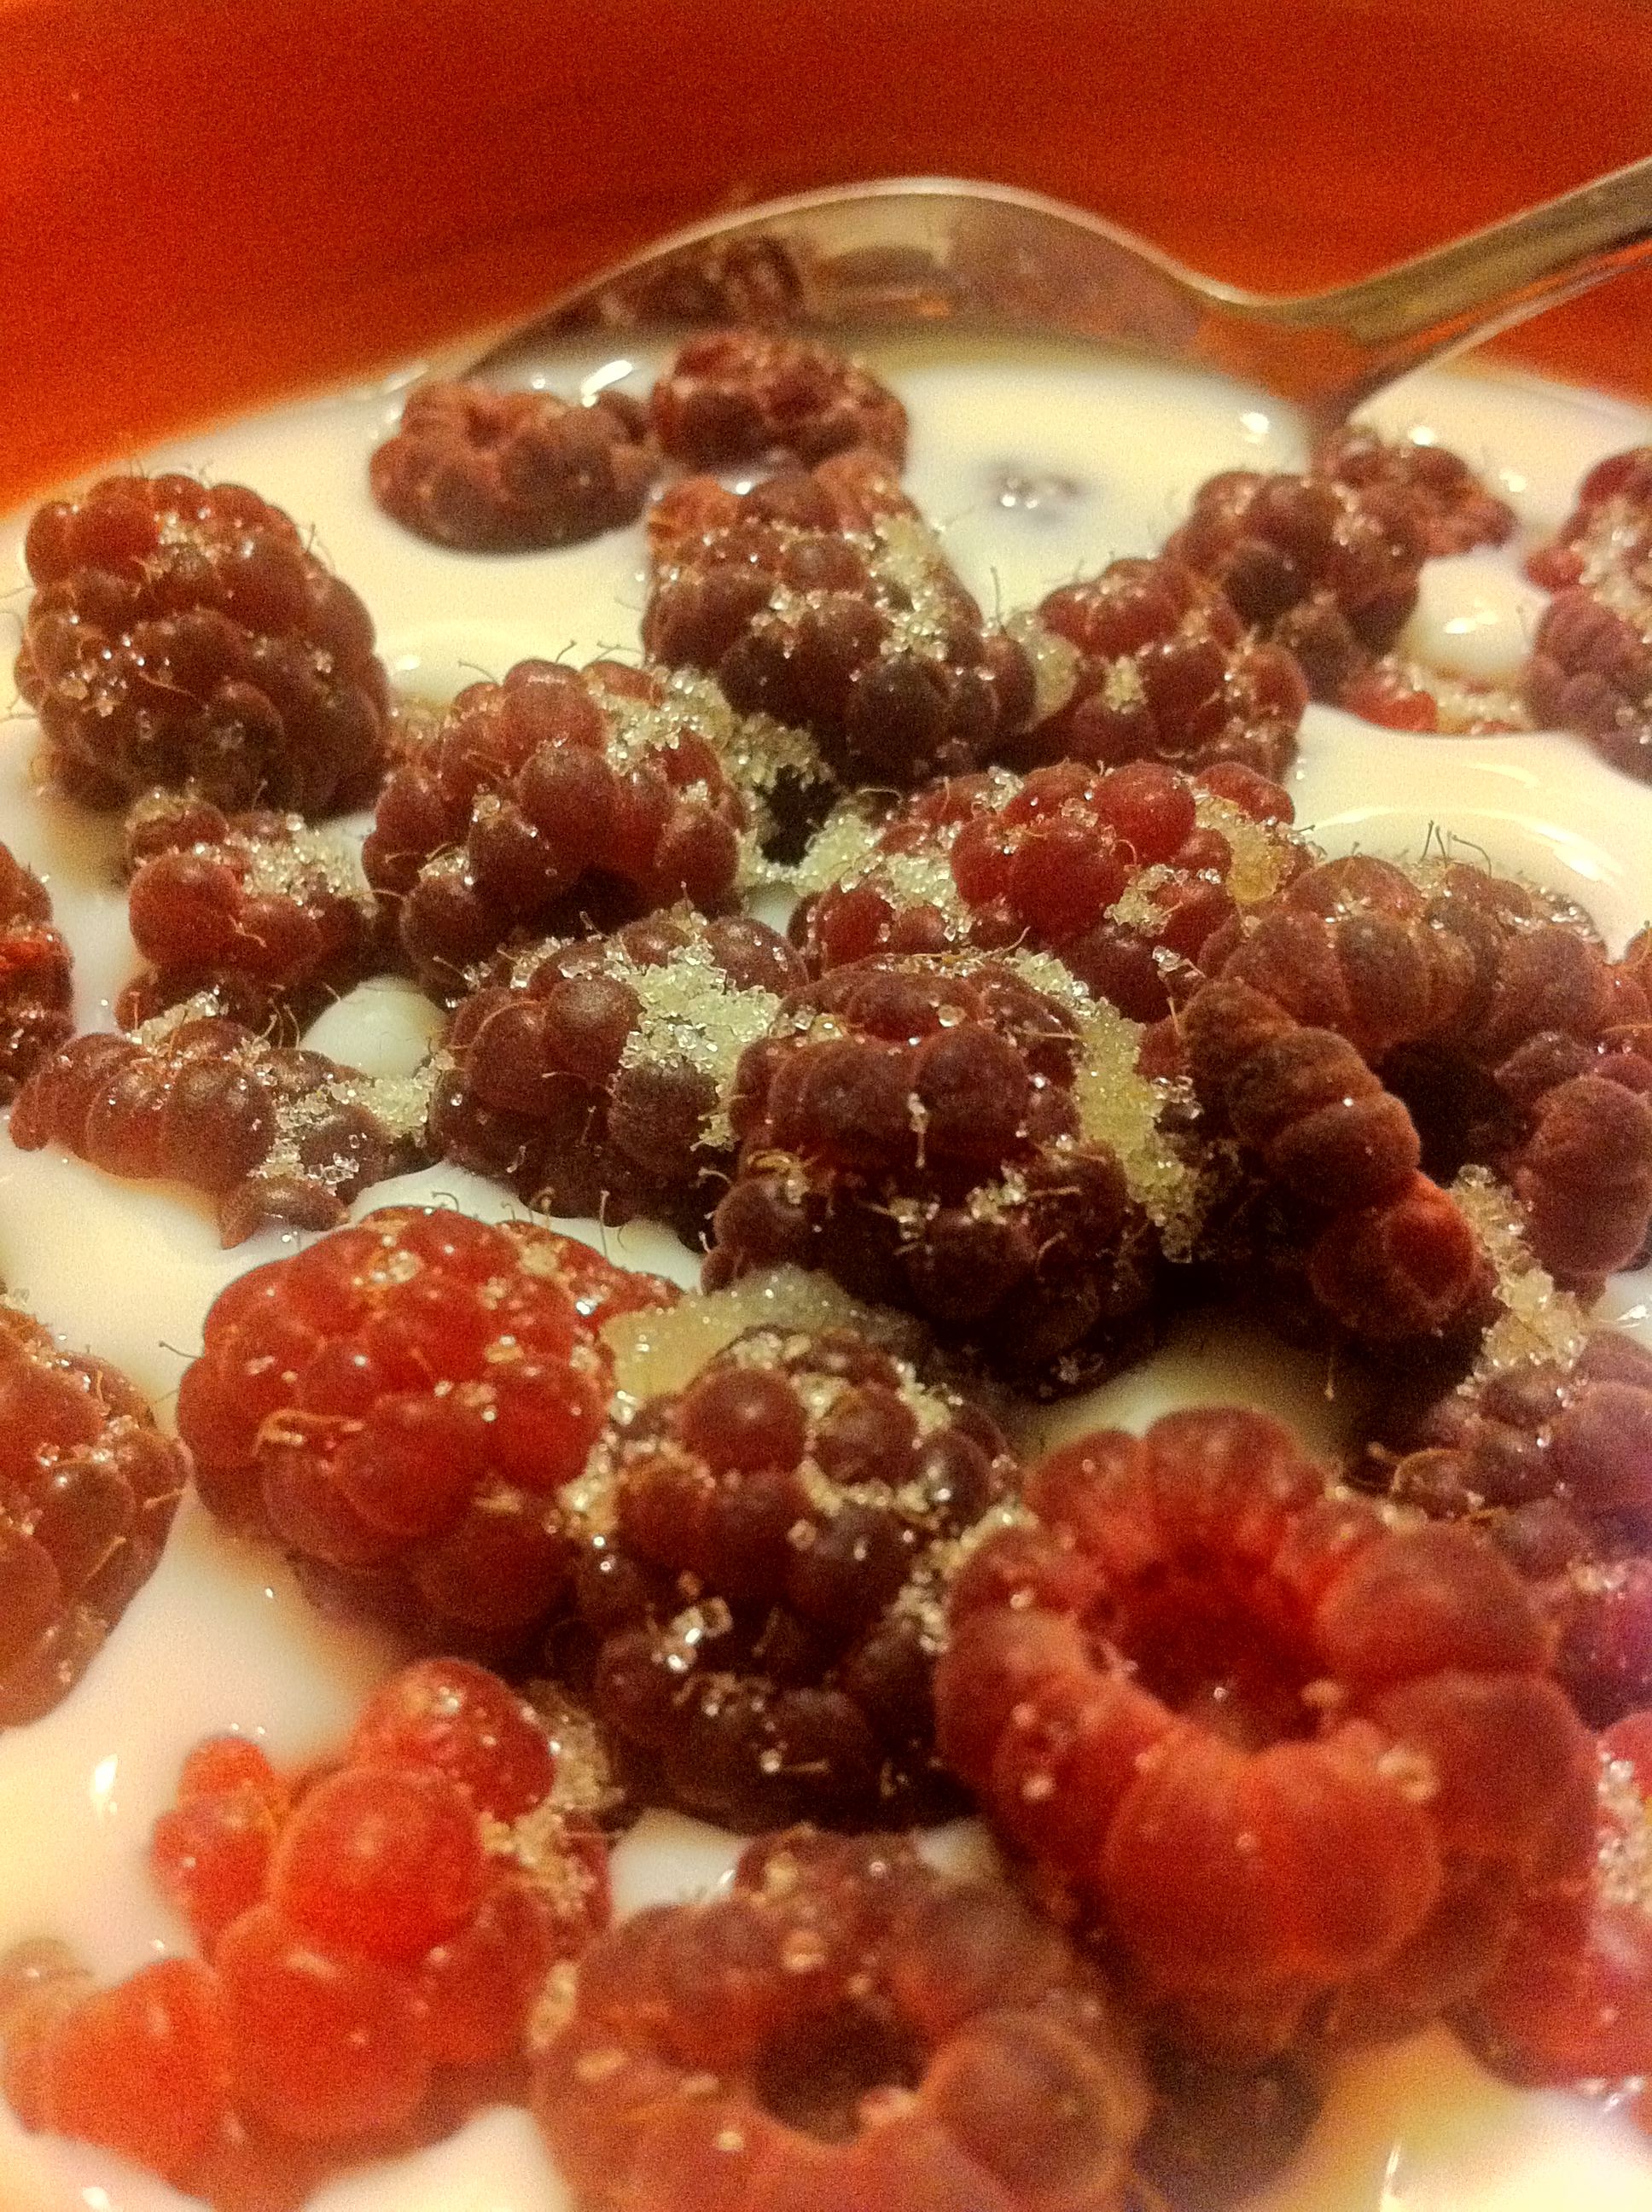 Raspberries, Milk, and Sugar Dessert Treat